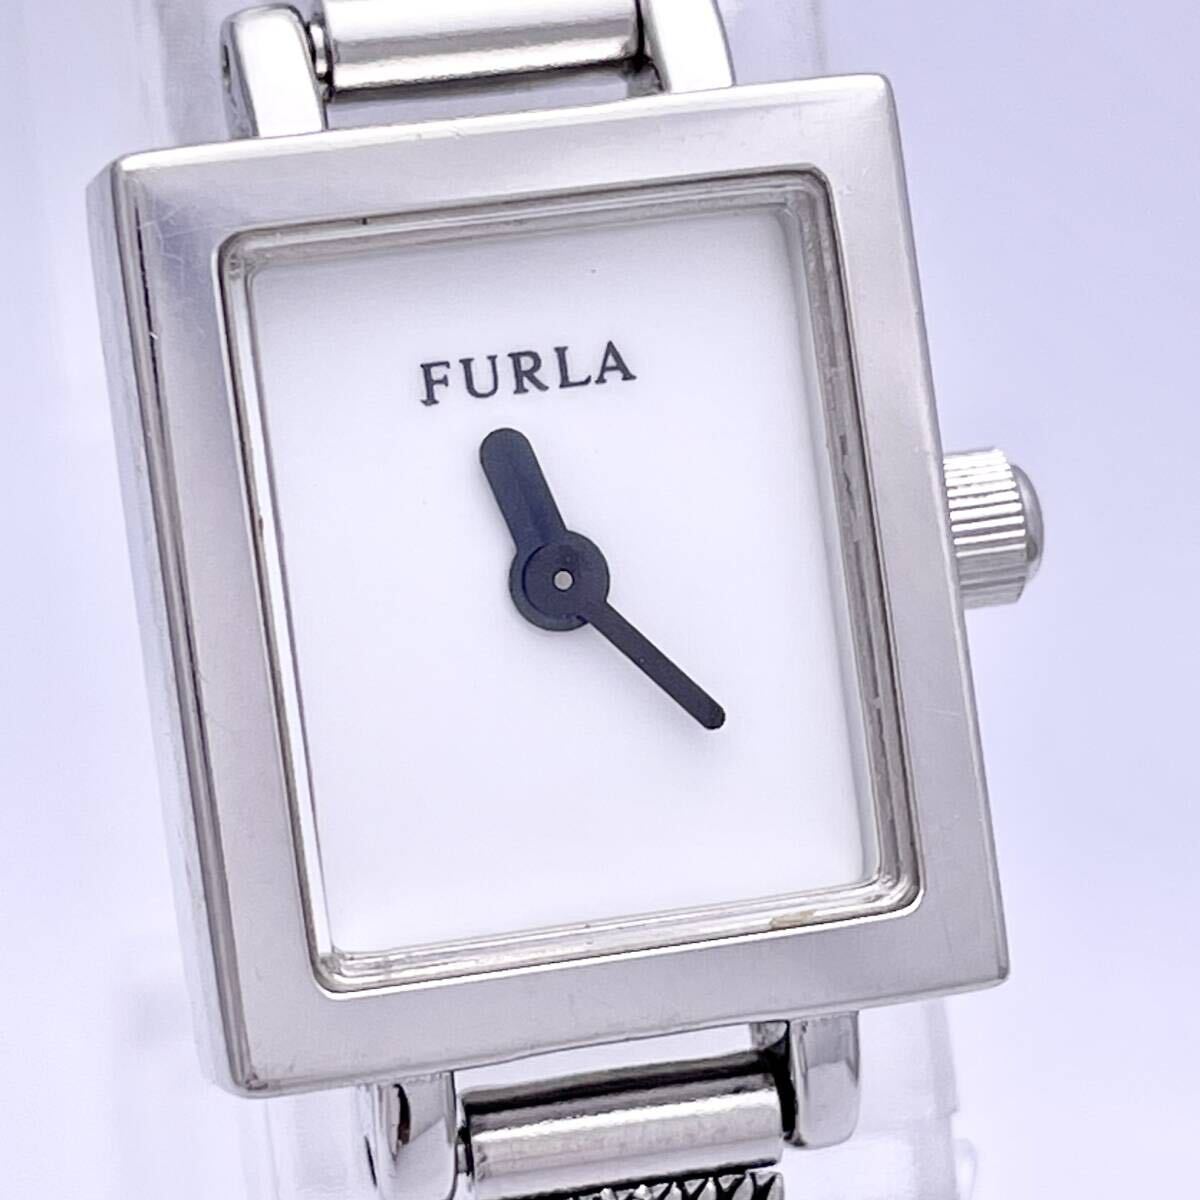 FURLA フルラ STEEL COLLECTION 腕時計 ウォッチ クォーツ quartz 銀 シルバー P205_画像4